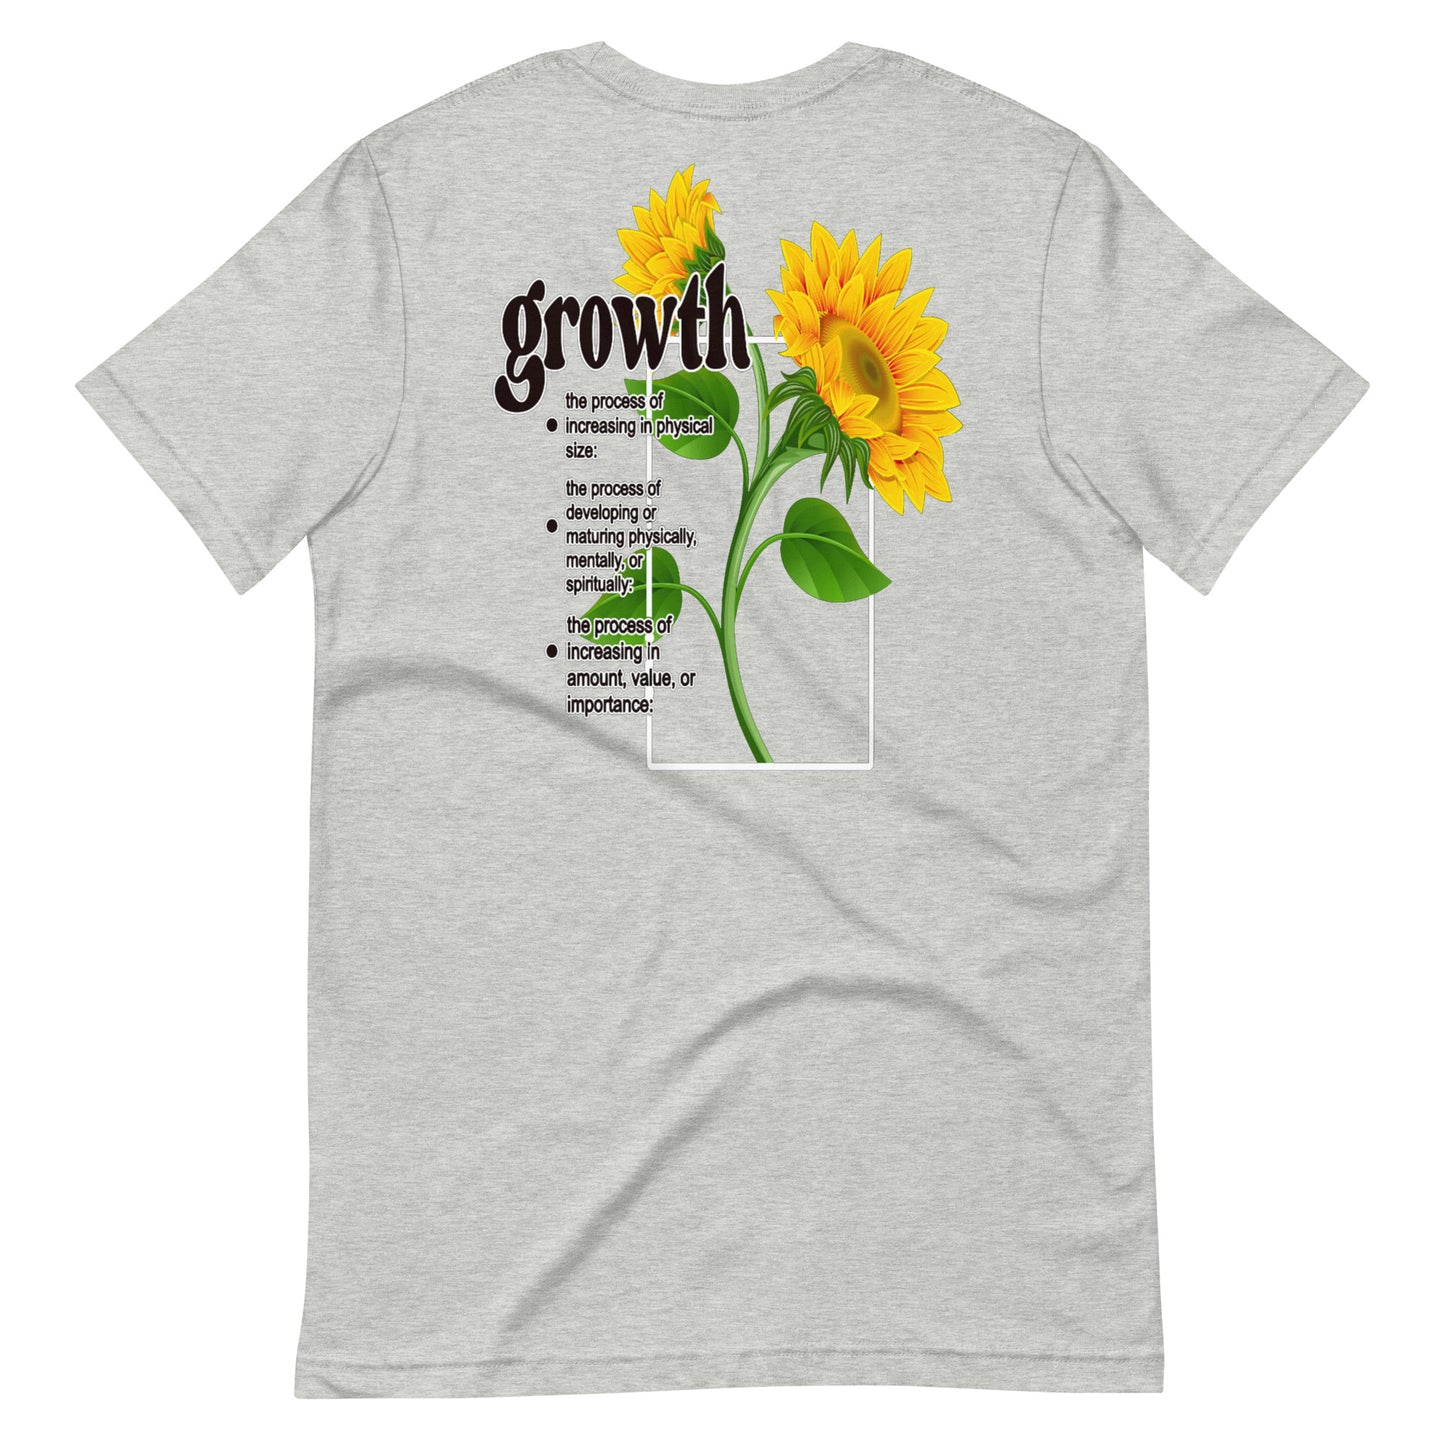 Growth T-shirt